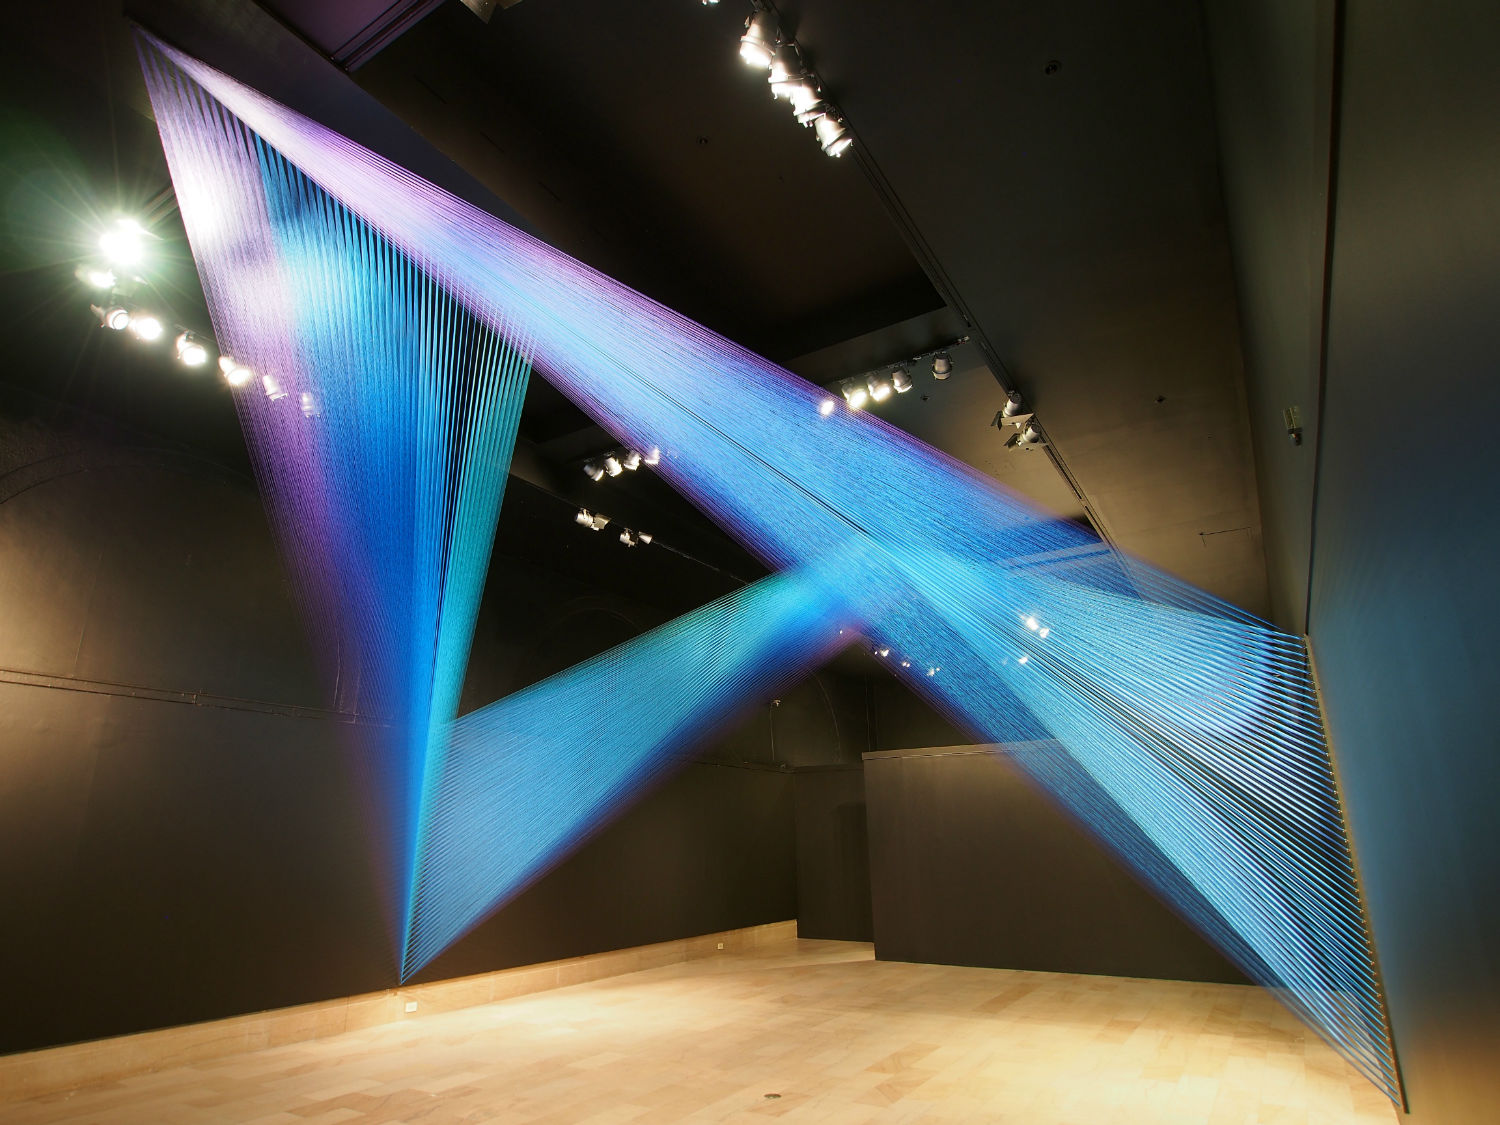 Plexus no. 31, 2015. Site-specific installation at the Newark Museum